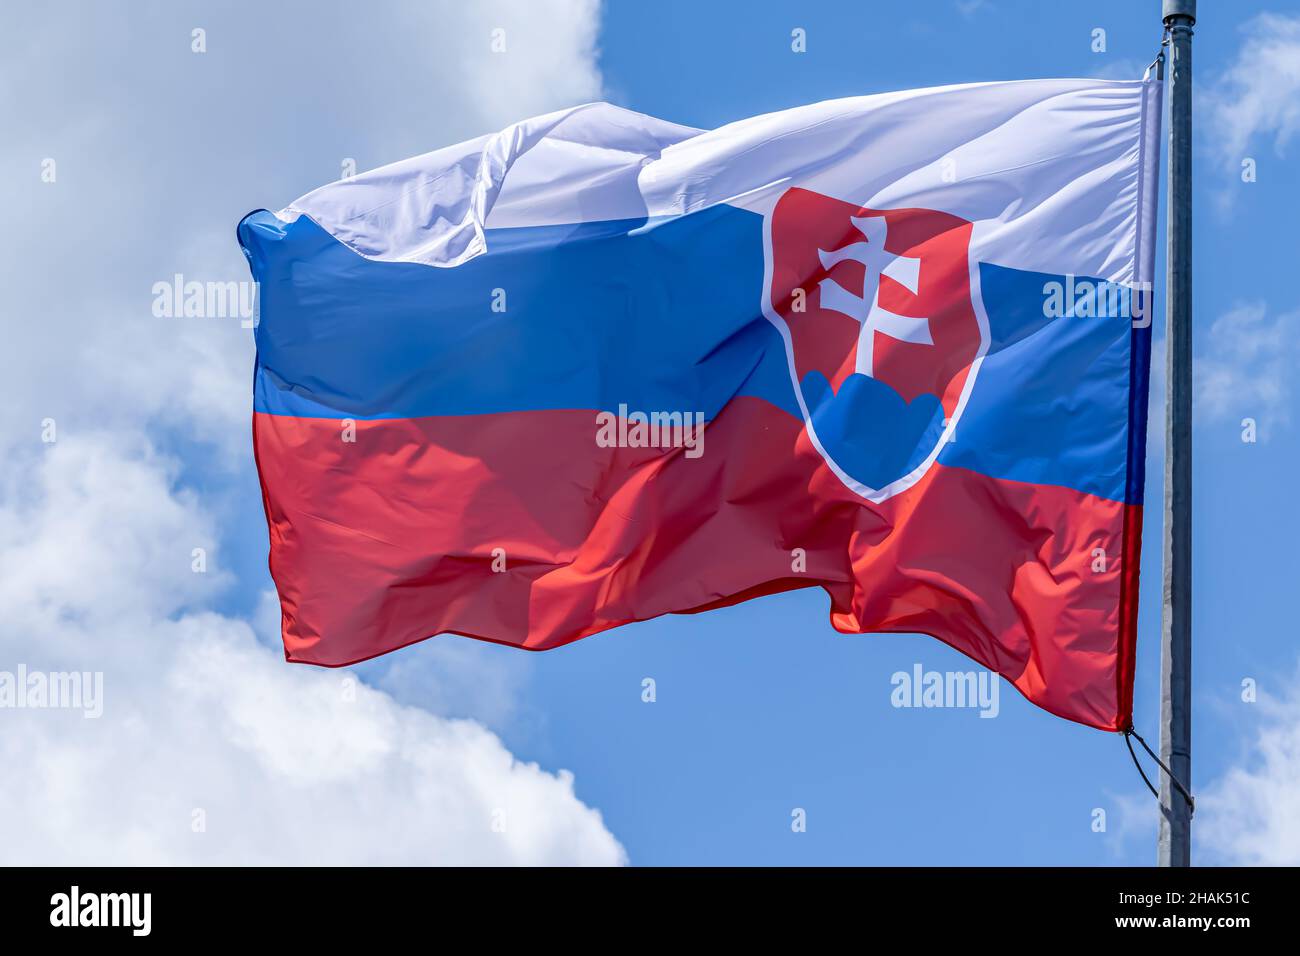 Slovak national flag waving on blue sky background. Slovak Republic, SK Stock Photo